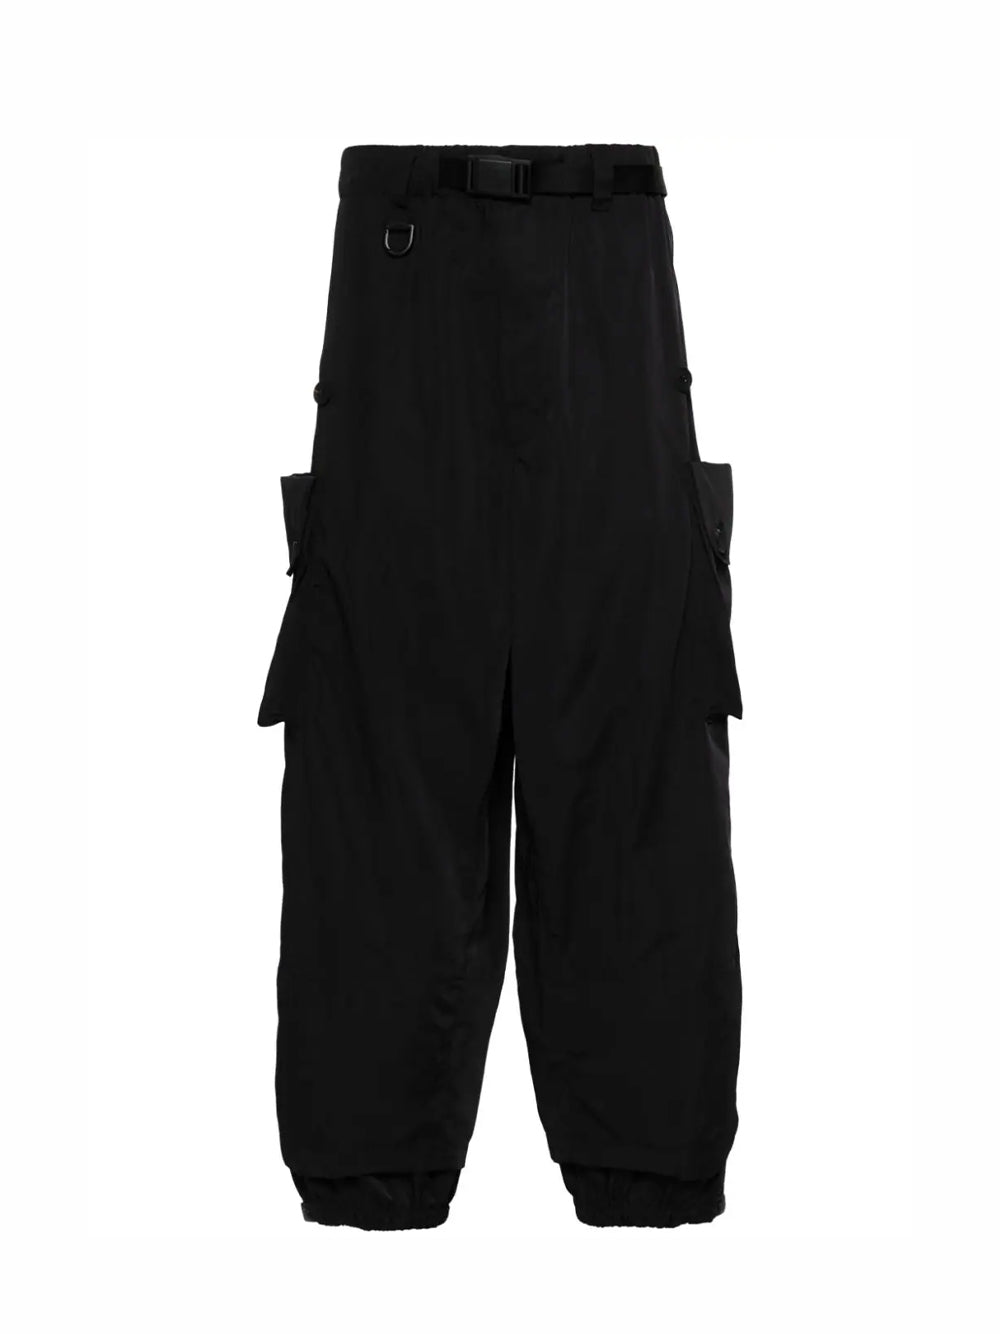 Nylon Twill Cuffed Pants (Black)